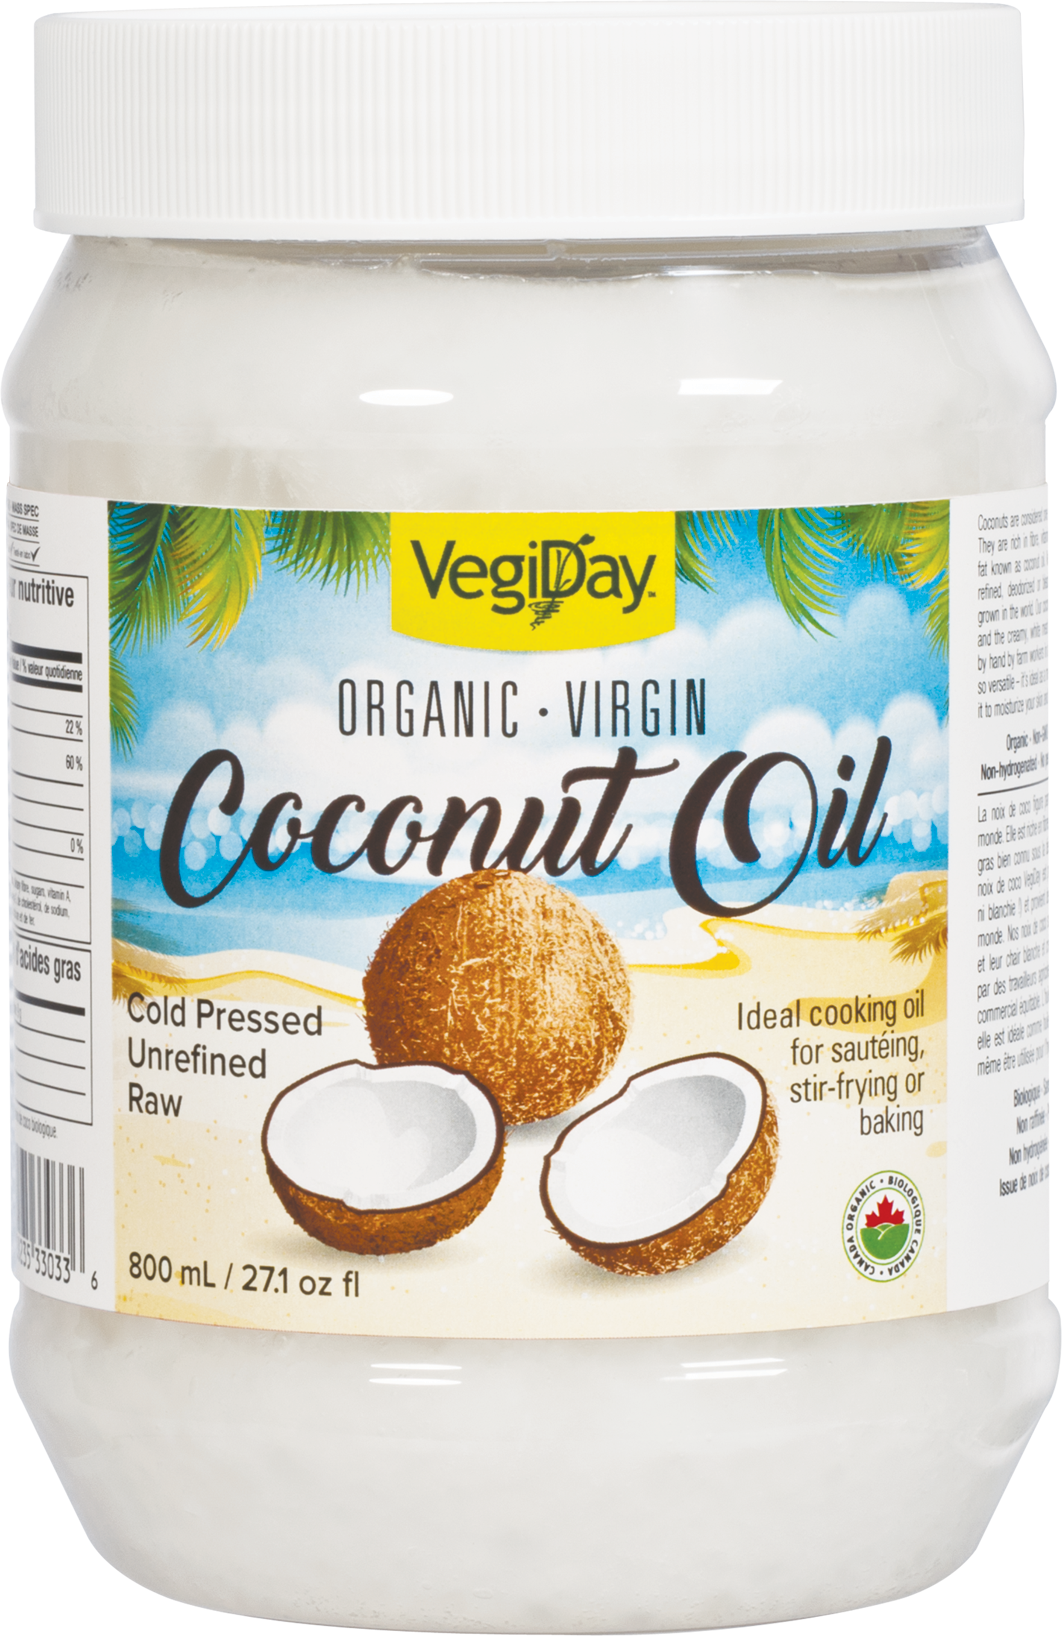 Vegiday Organic Virgin Coconut Oil 800ml